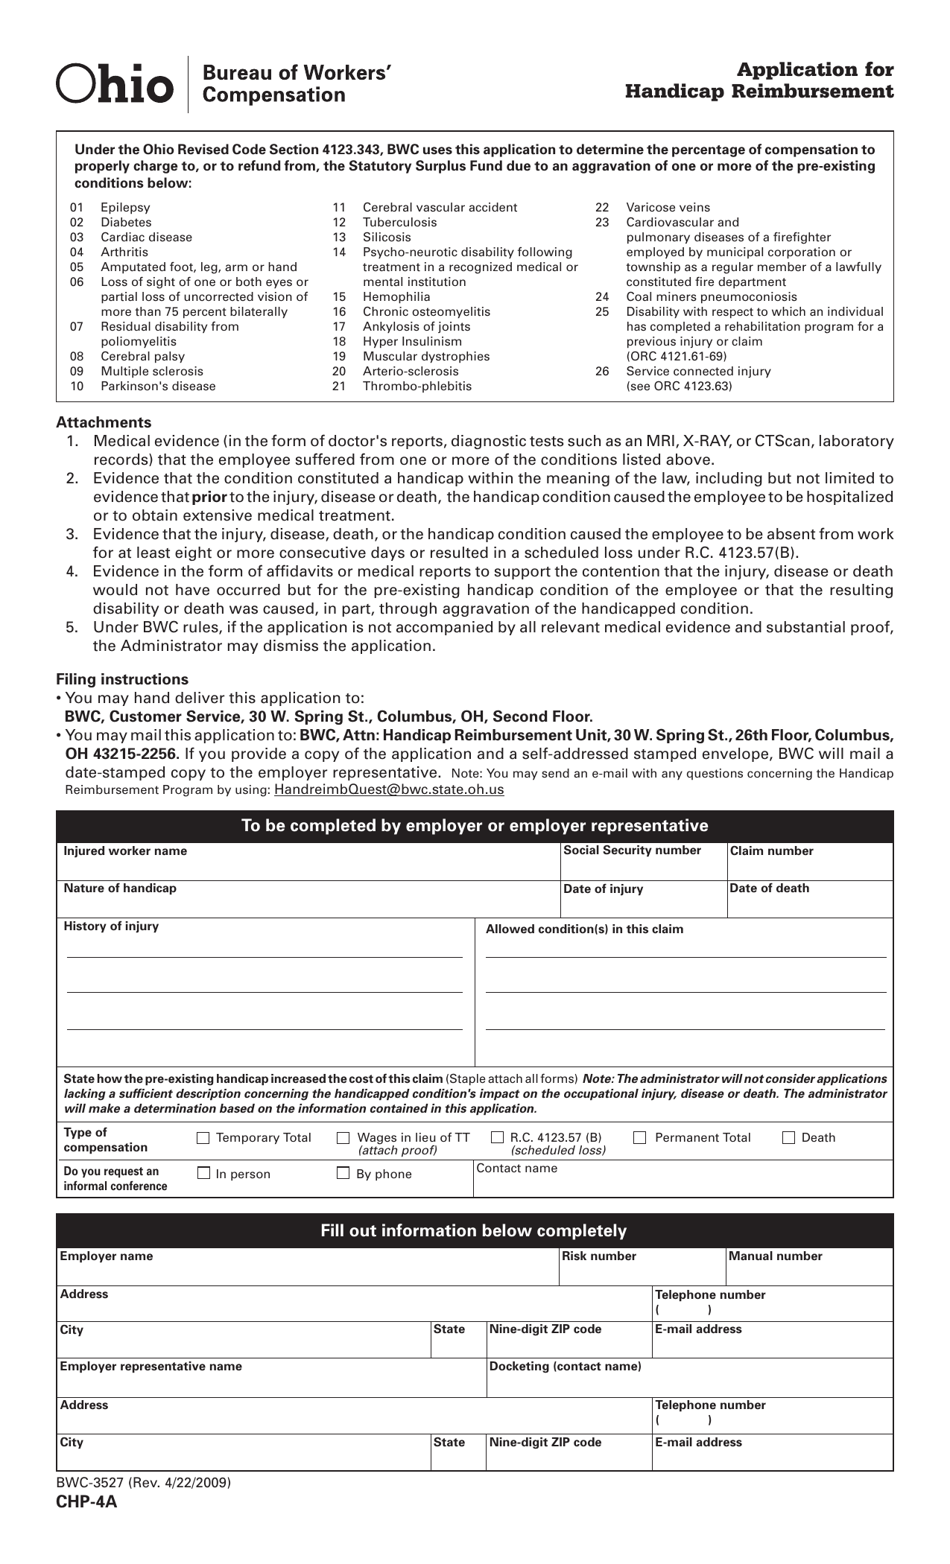 Form CHP-4A (BWC-3527) Application for Handicap Reimbursement - Ohio, Page 1